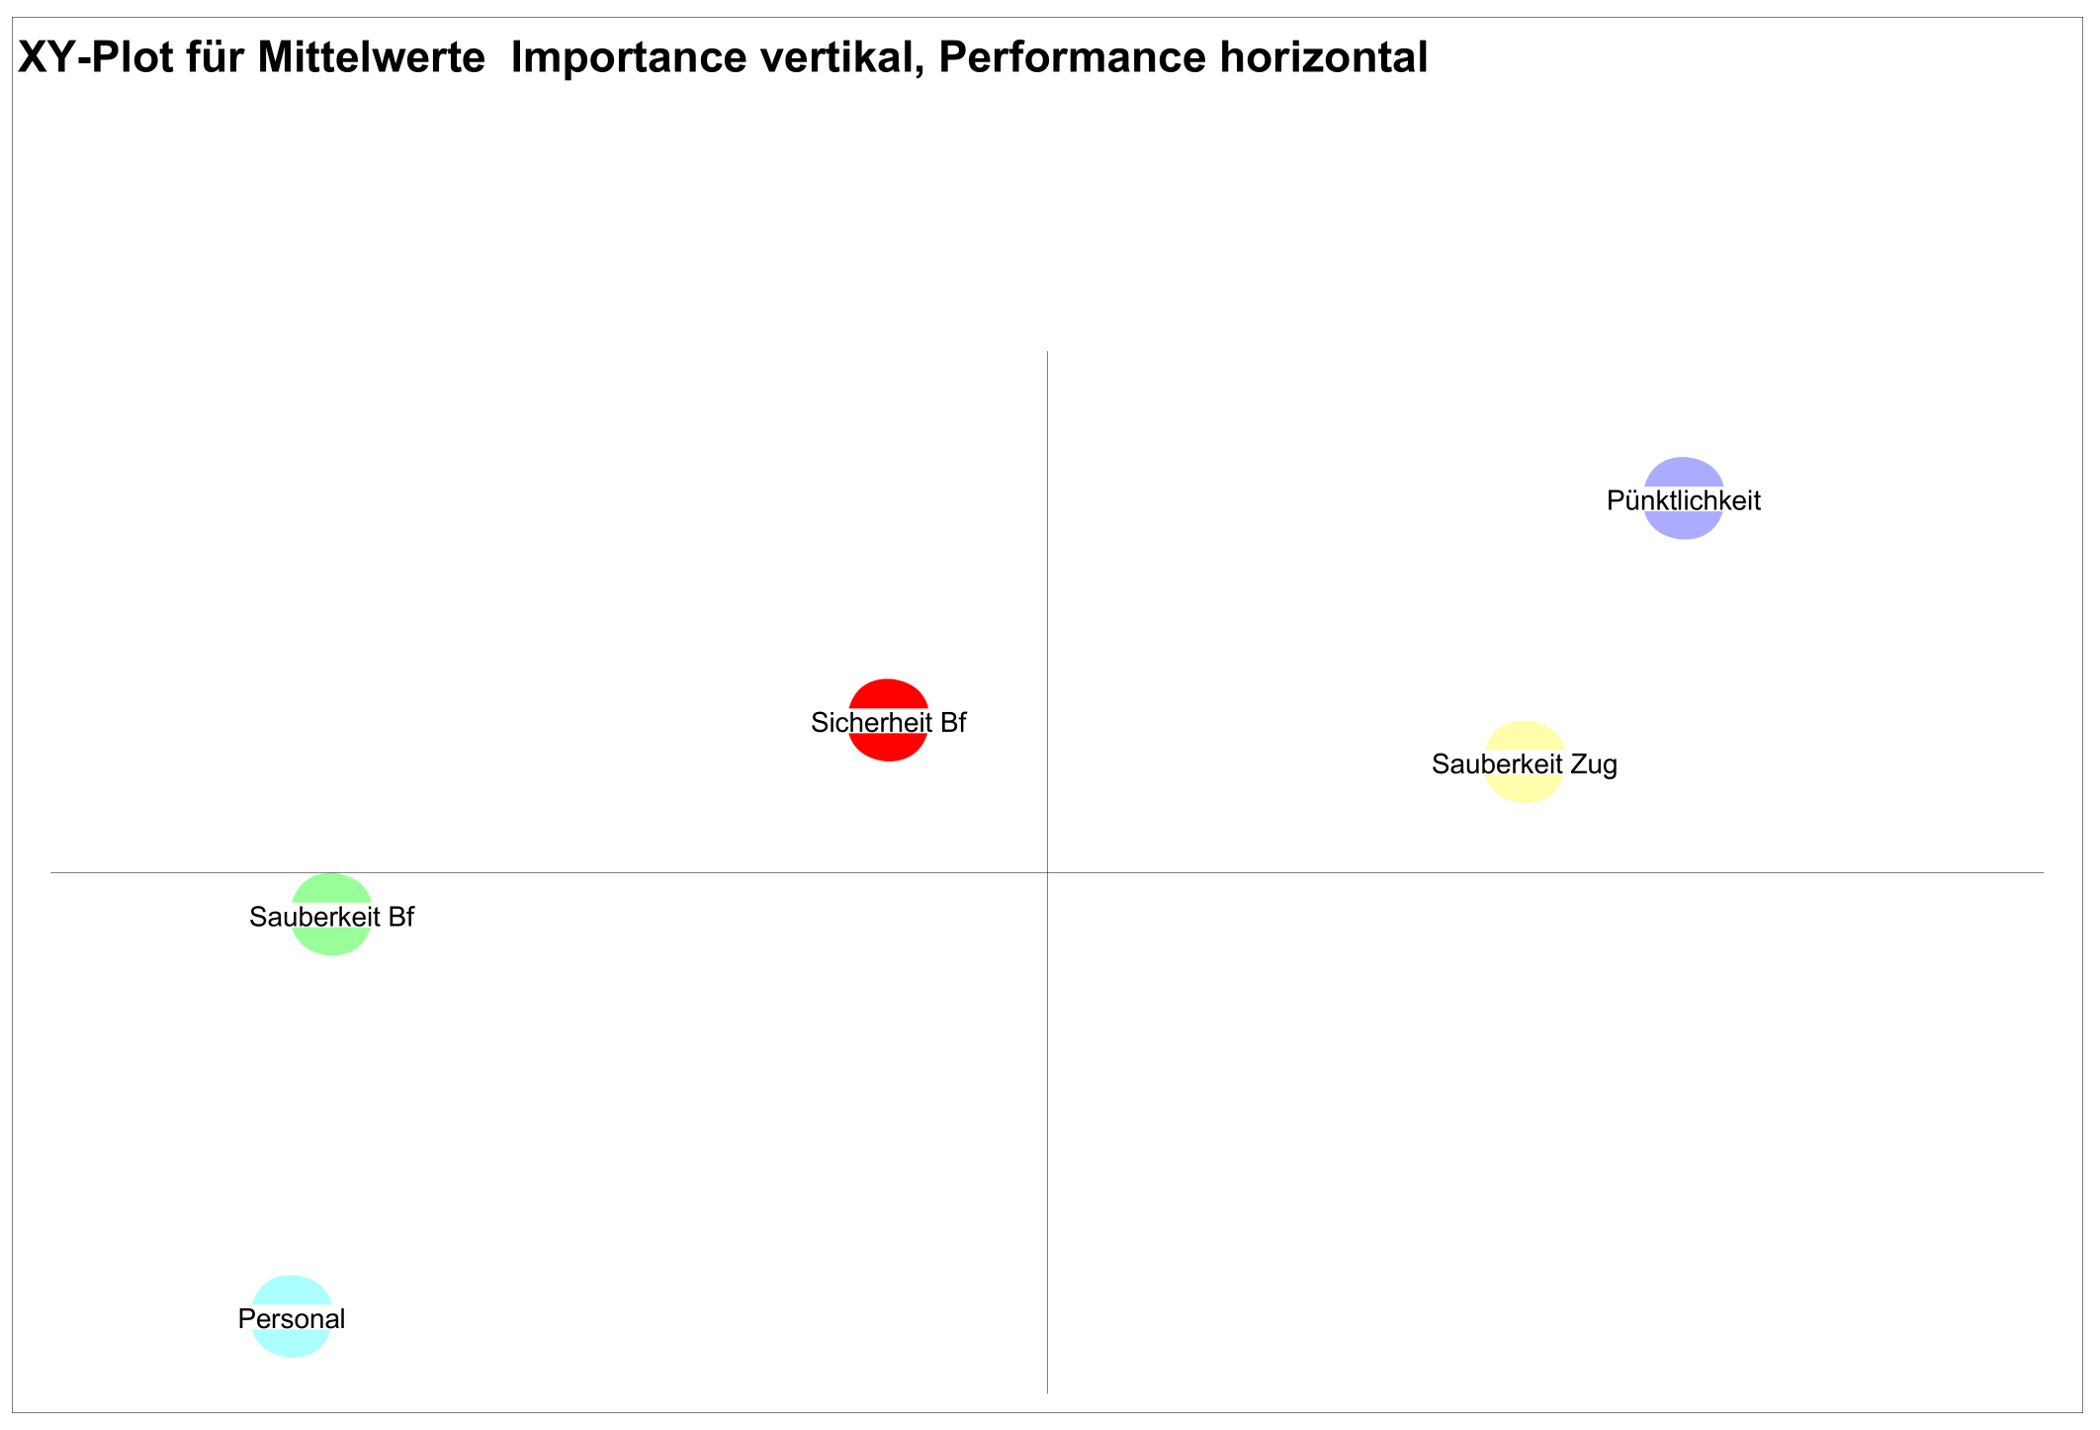 X/Y-Plot Performance vs. Importance